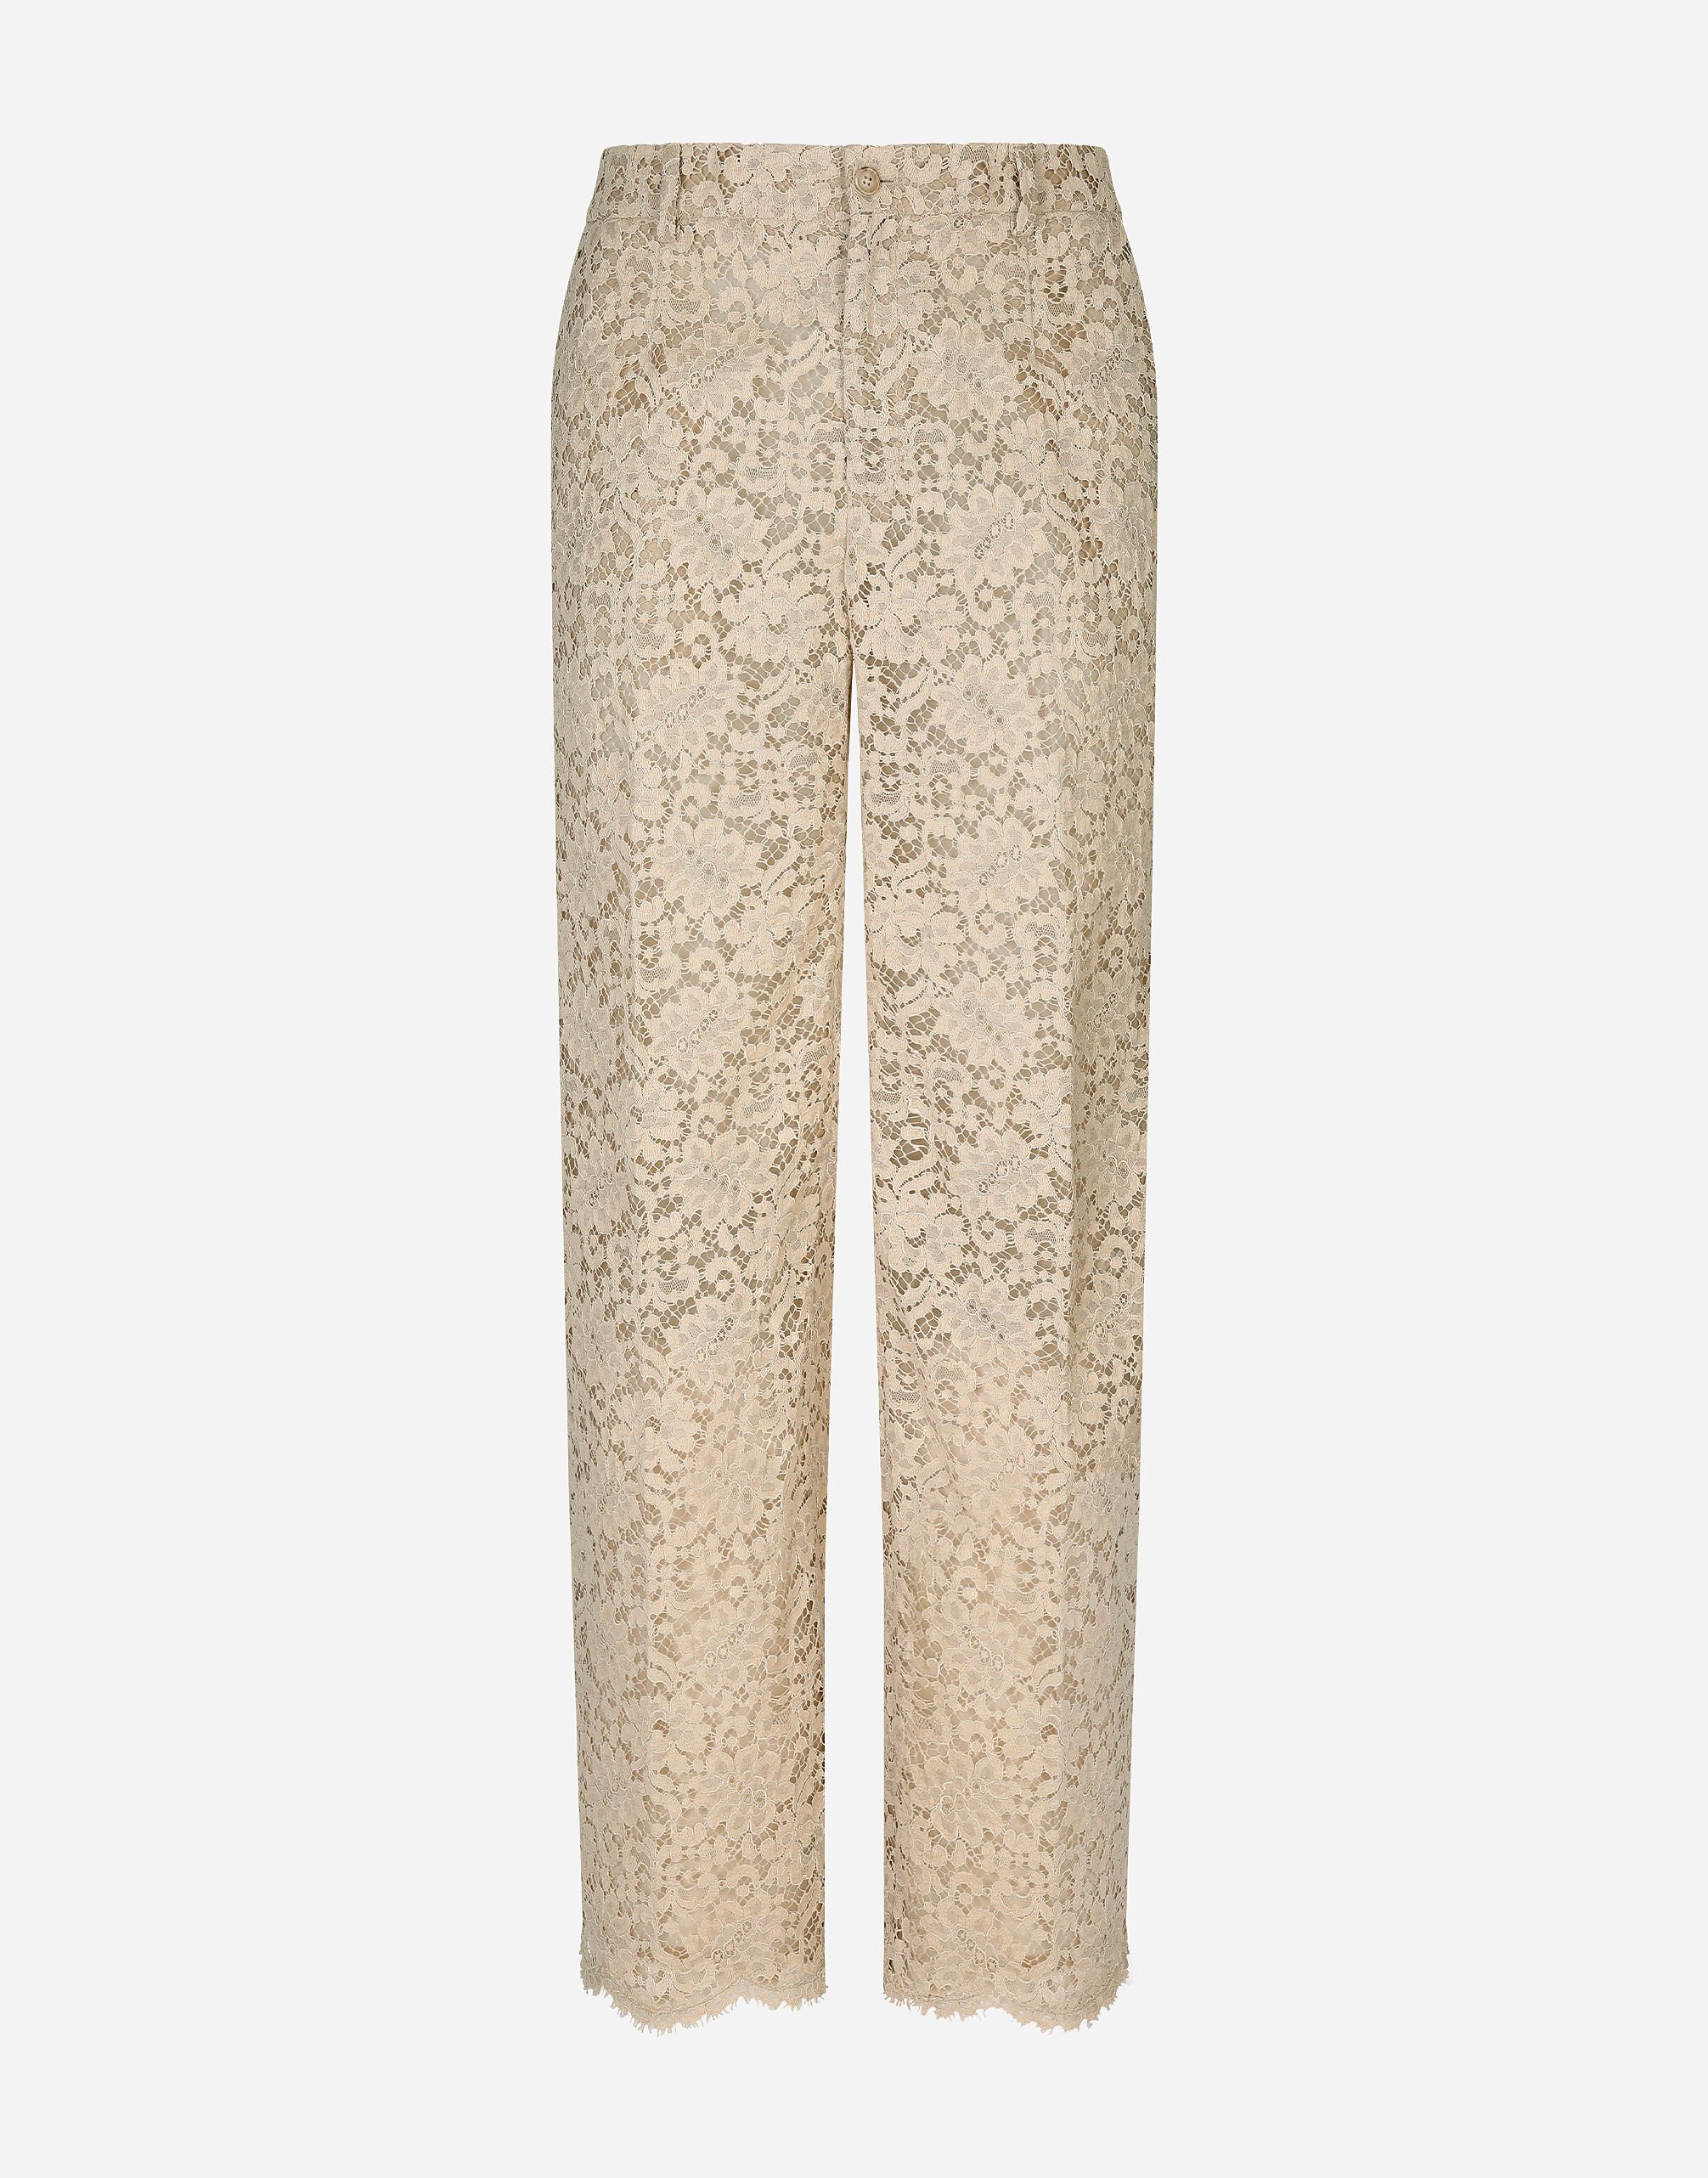 Dolce & Gabbana Pantalon en dentelle cordonnet Multicolore GY6UETFR4BP